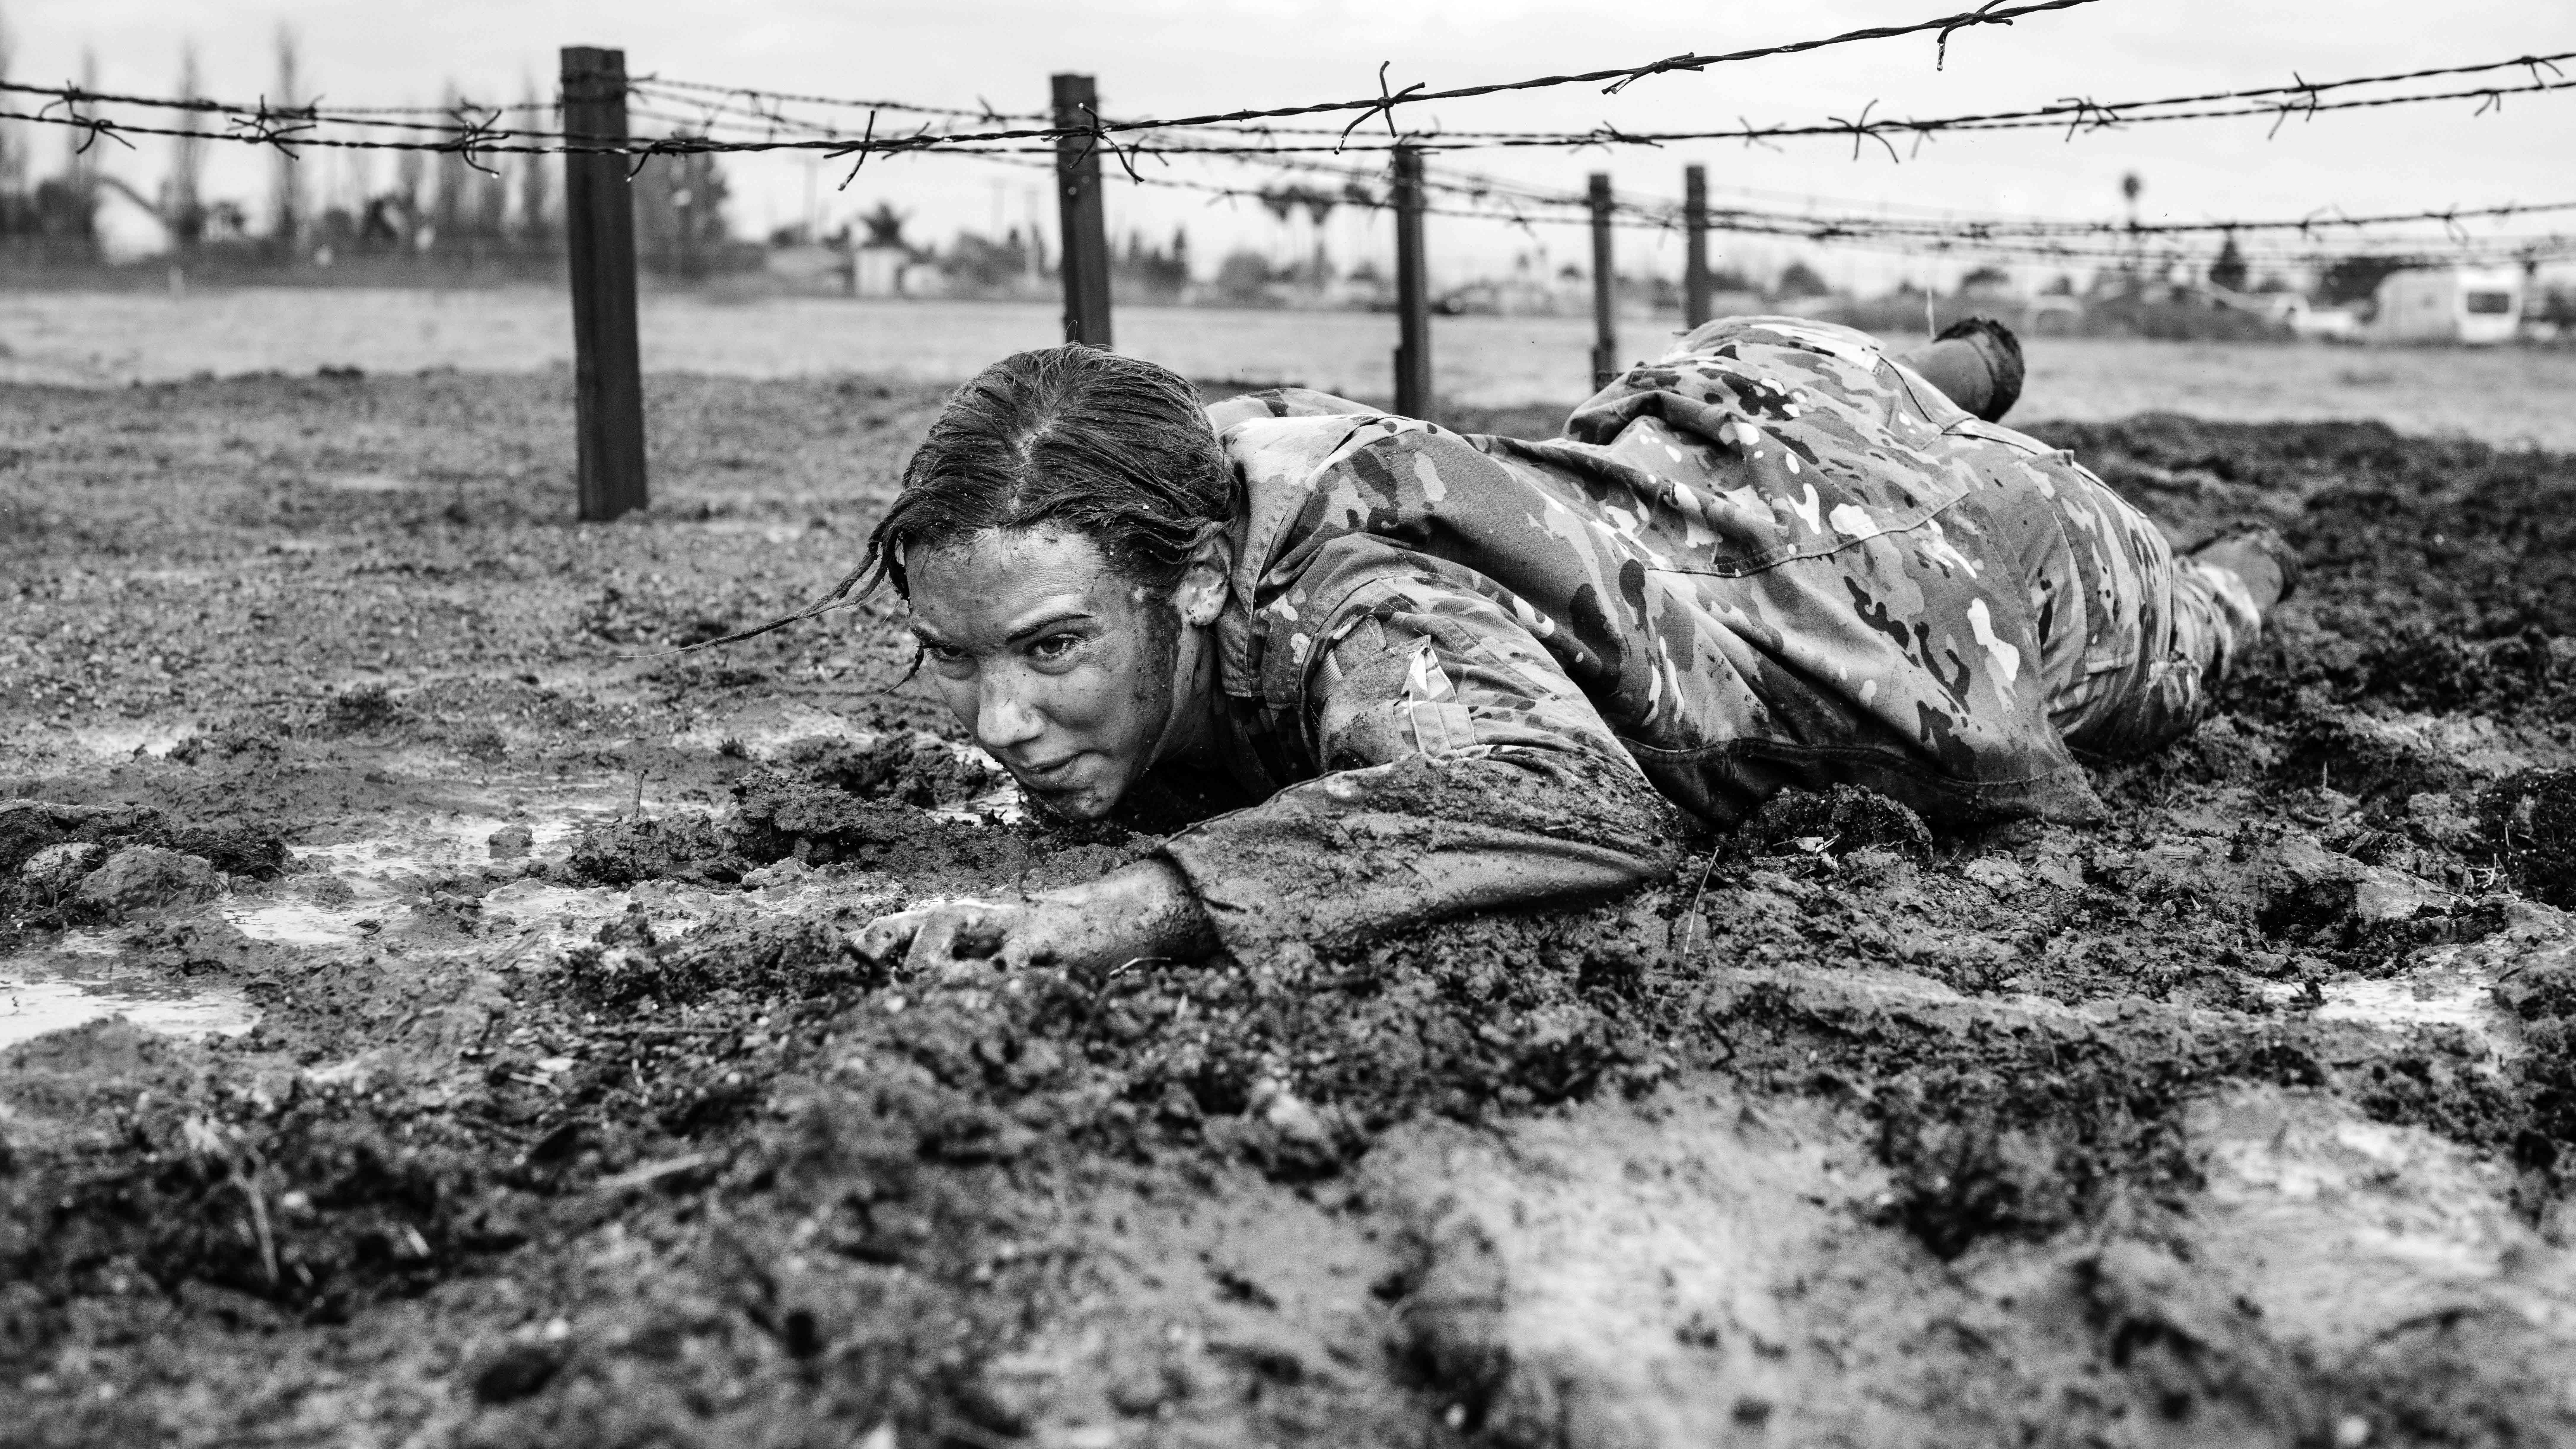 Soldier crawling through mud